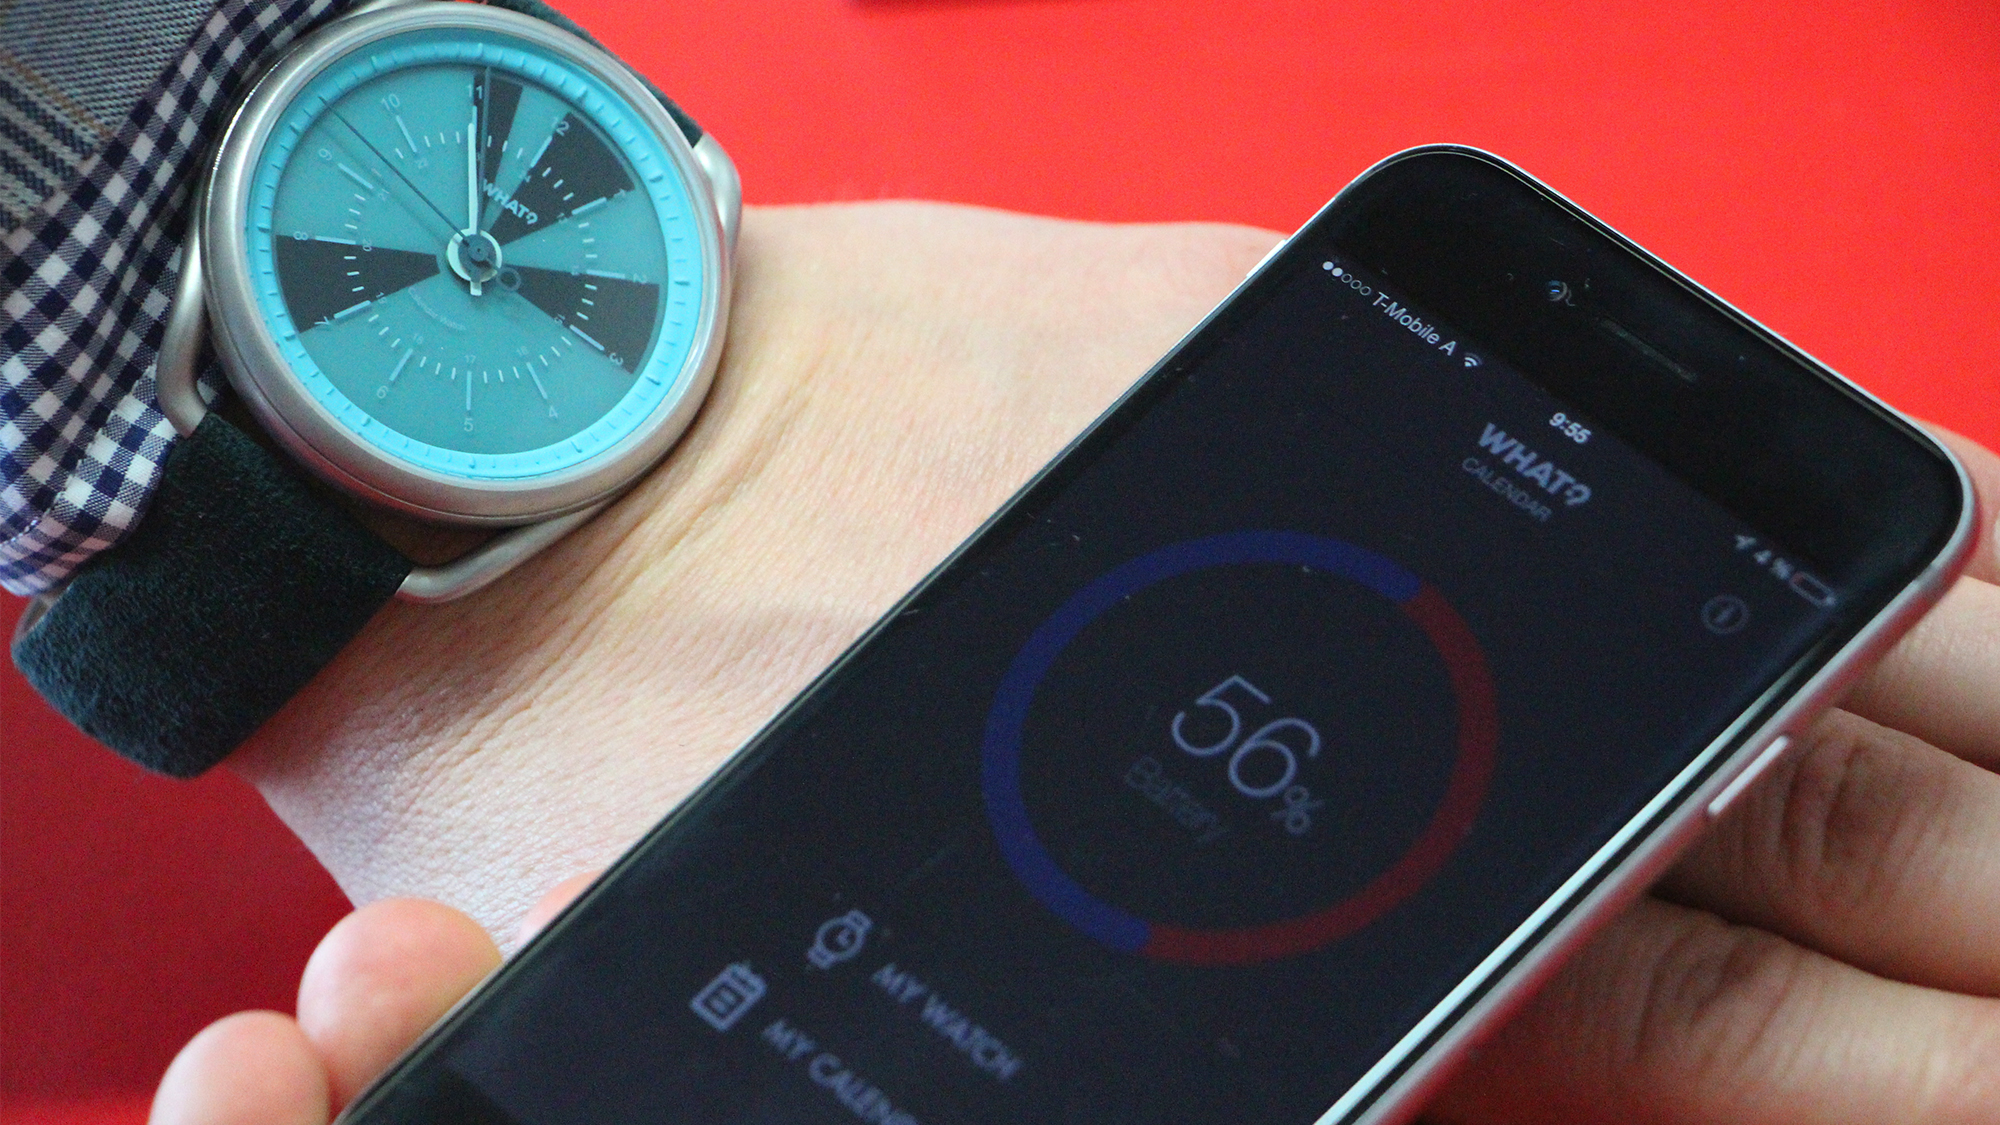 Die Uhren funken per Bluetooth an iPhone- bzw. Android-Apps. © Jakob Steinschaden